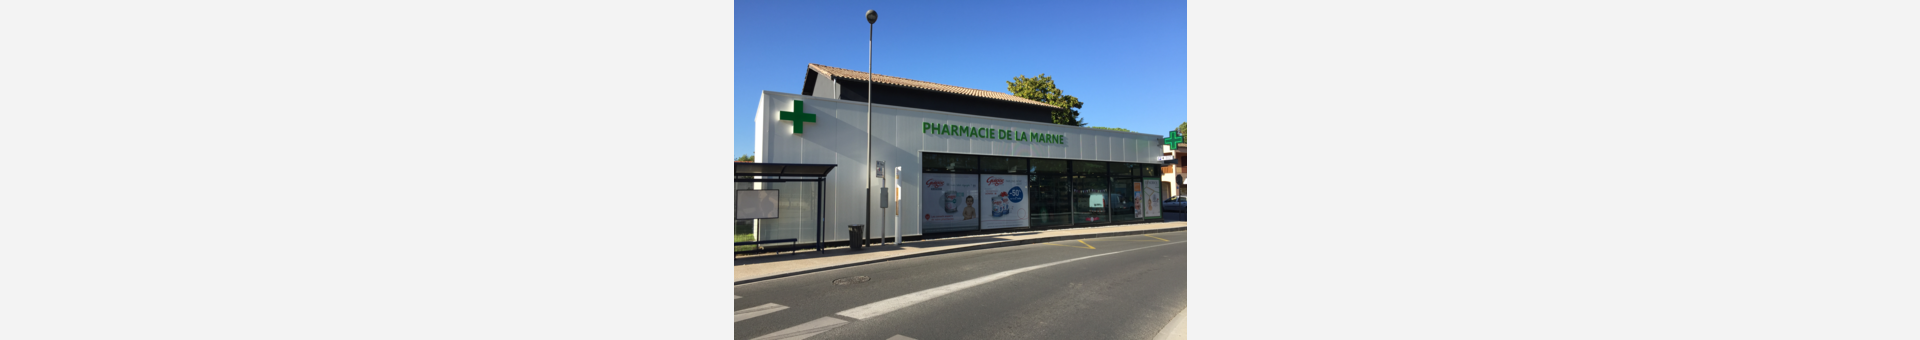 Pharmacie De La Marne,Libourne